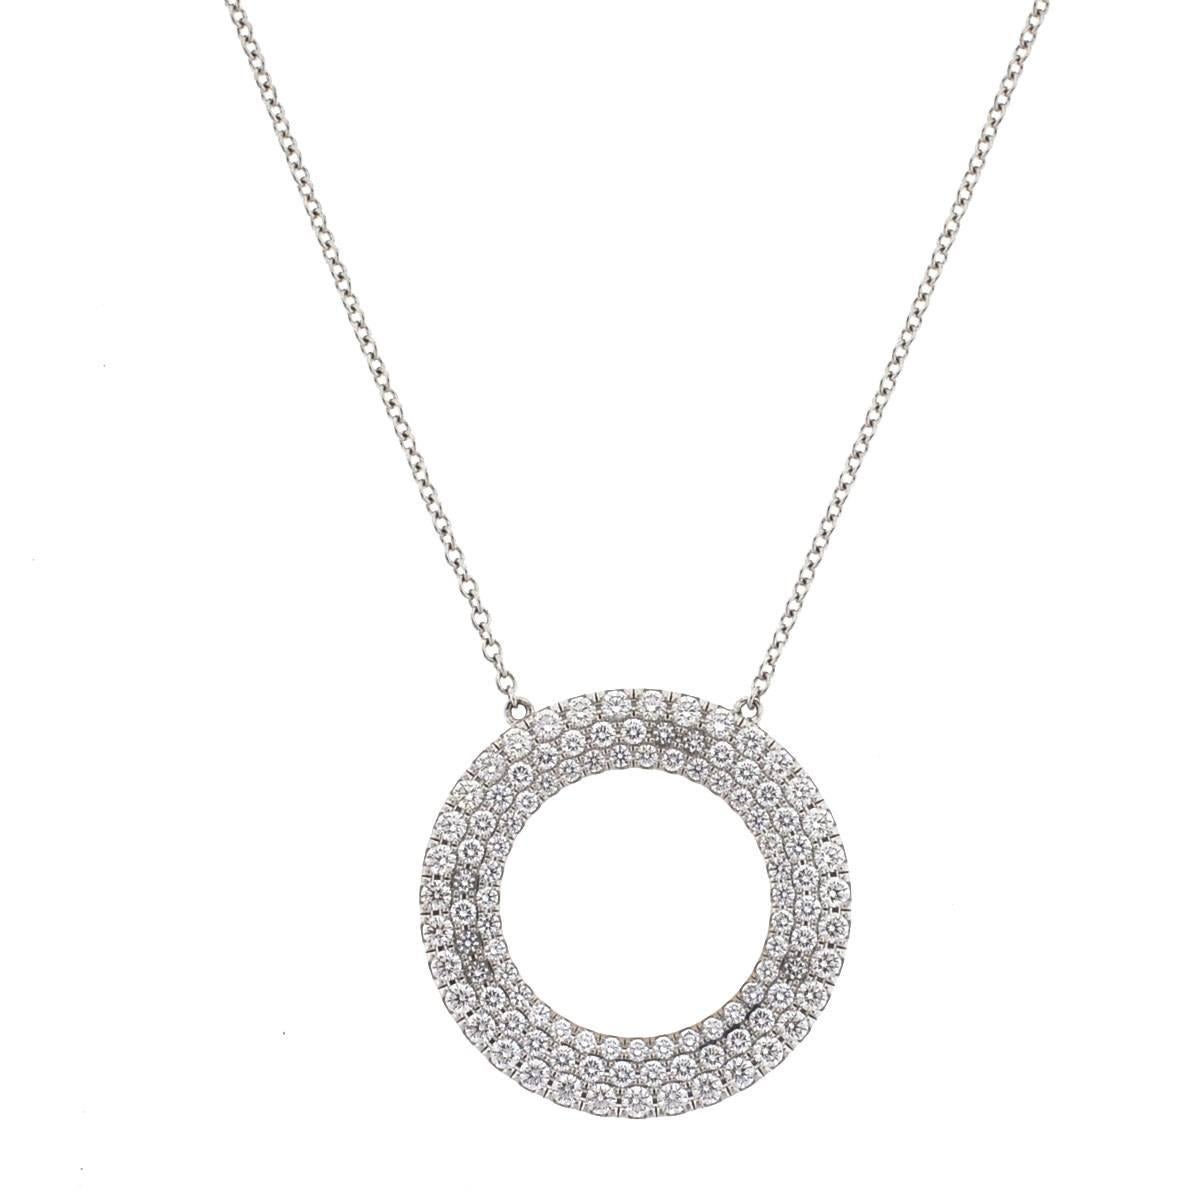 Company - Tiffany & Co
Style - Metro 3 Row Circle Pendant
Metal - 18k White Gold
Stones - Diamonds - .70 cts 
Chain Length - Size 16